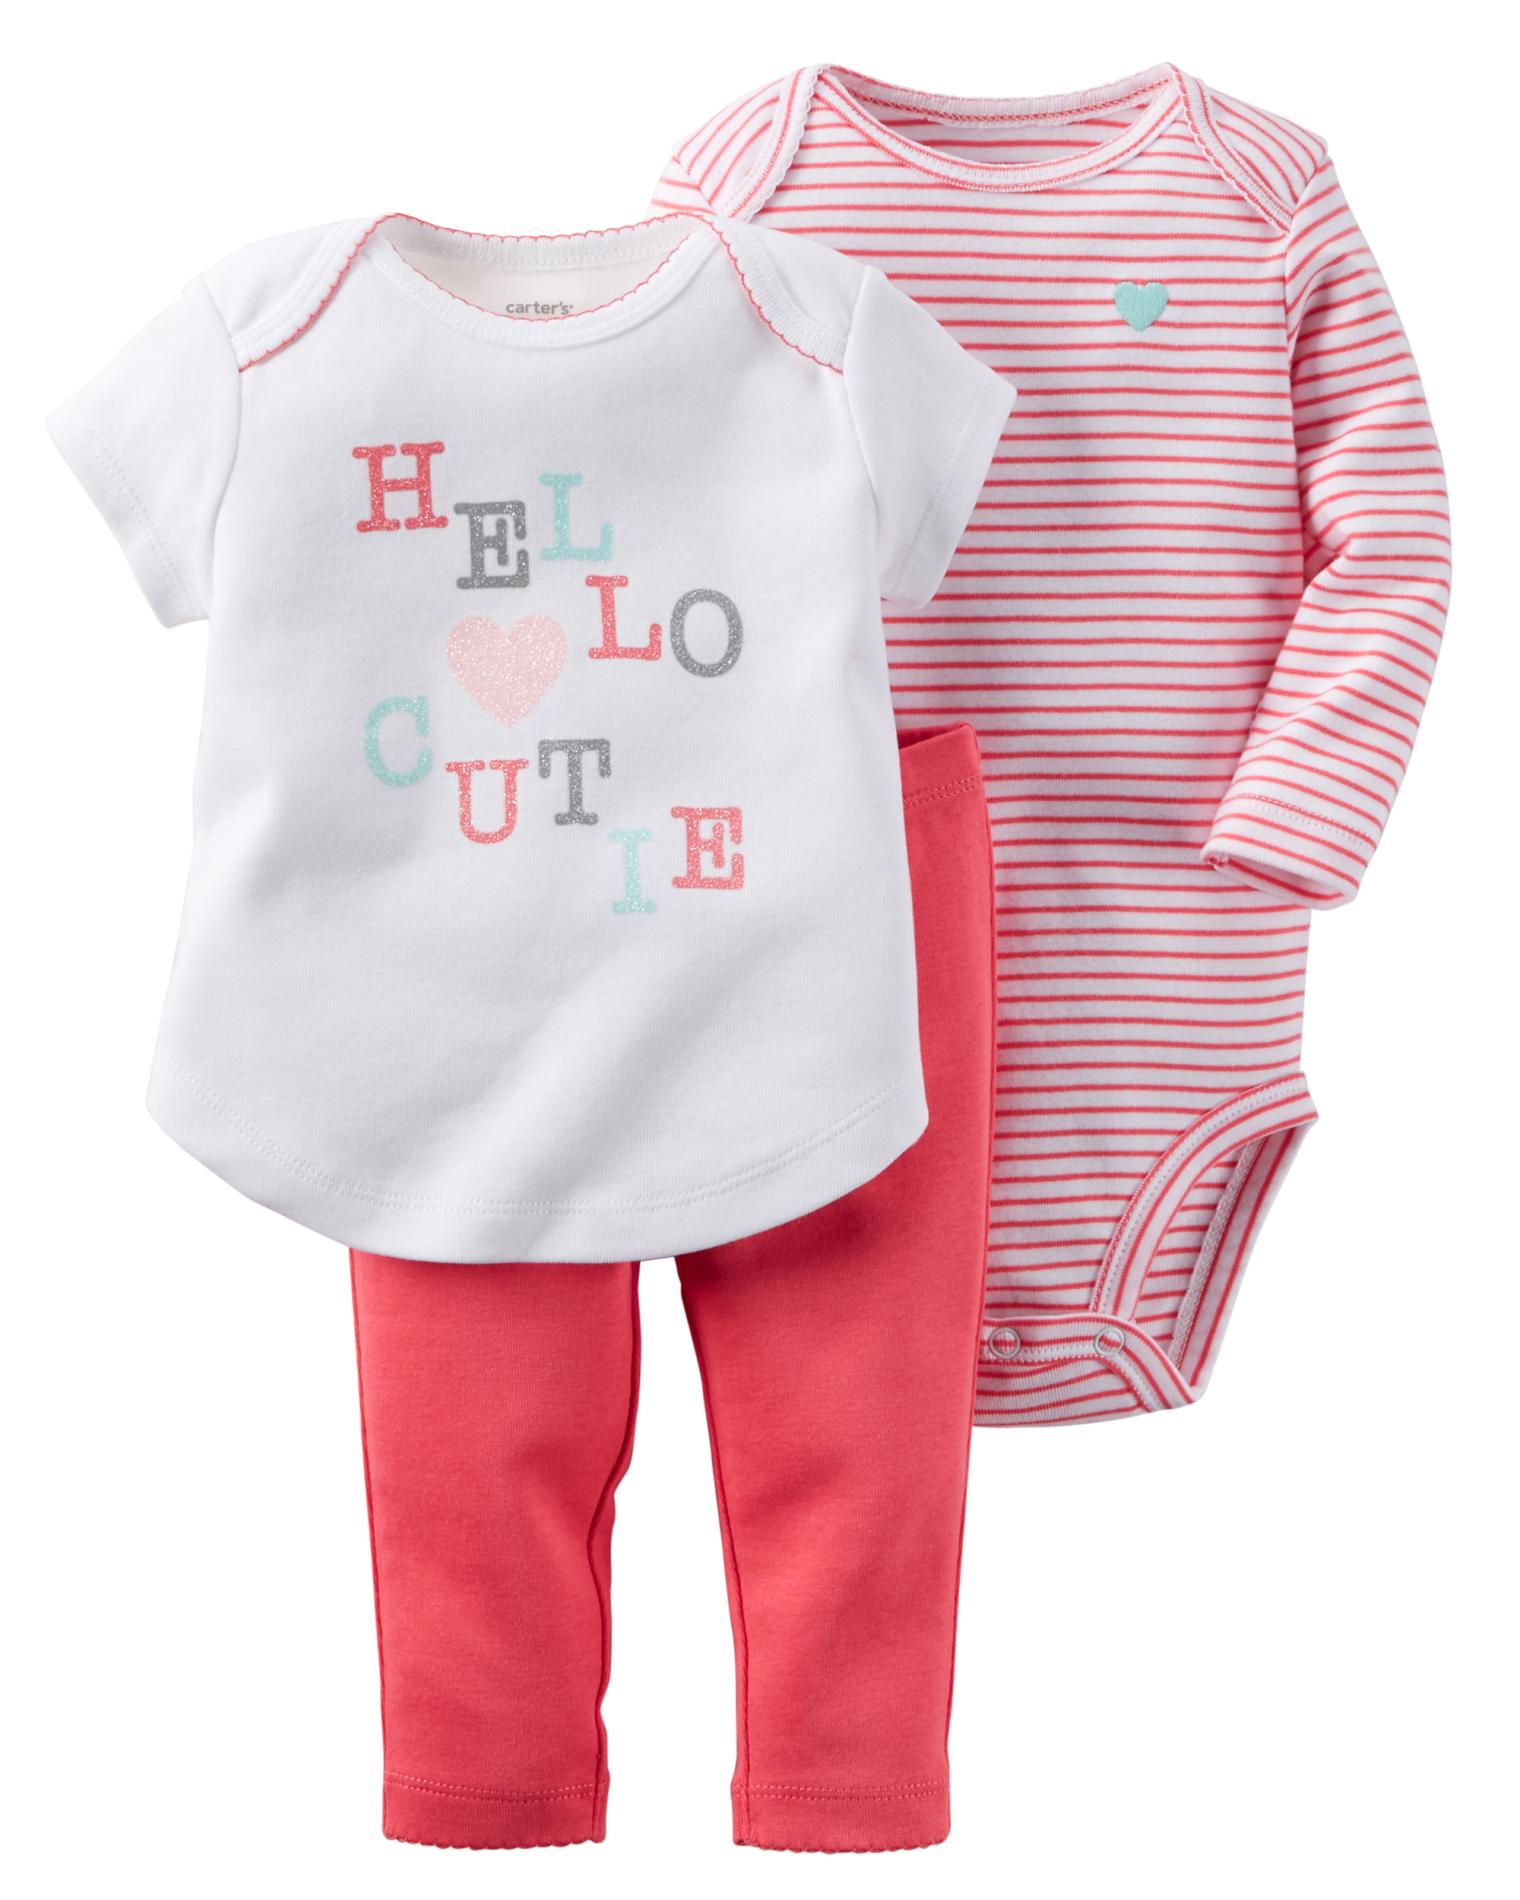 Carter's Newborn & Infant Girls' Bodysuit, Shirt & Pants - Striped